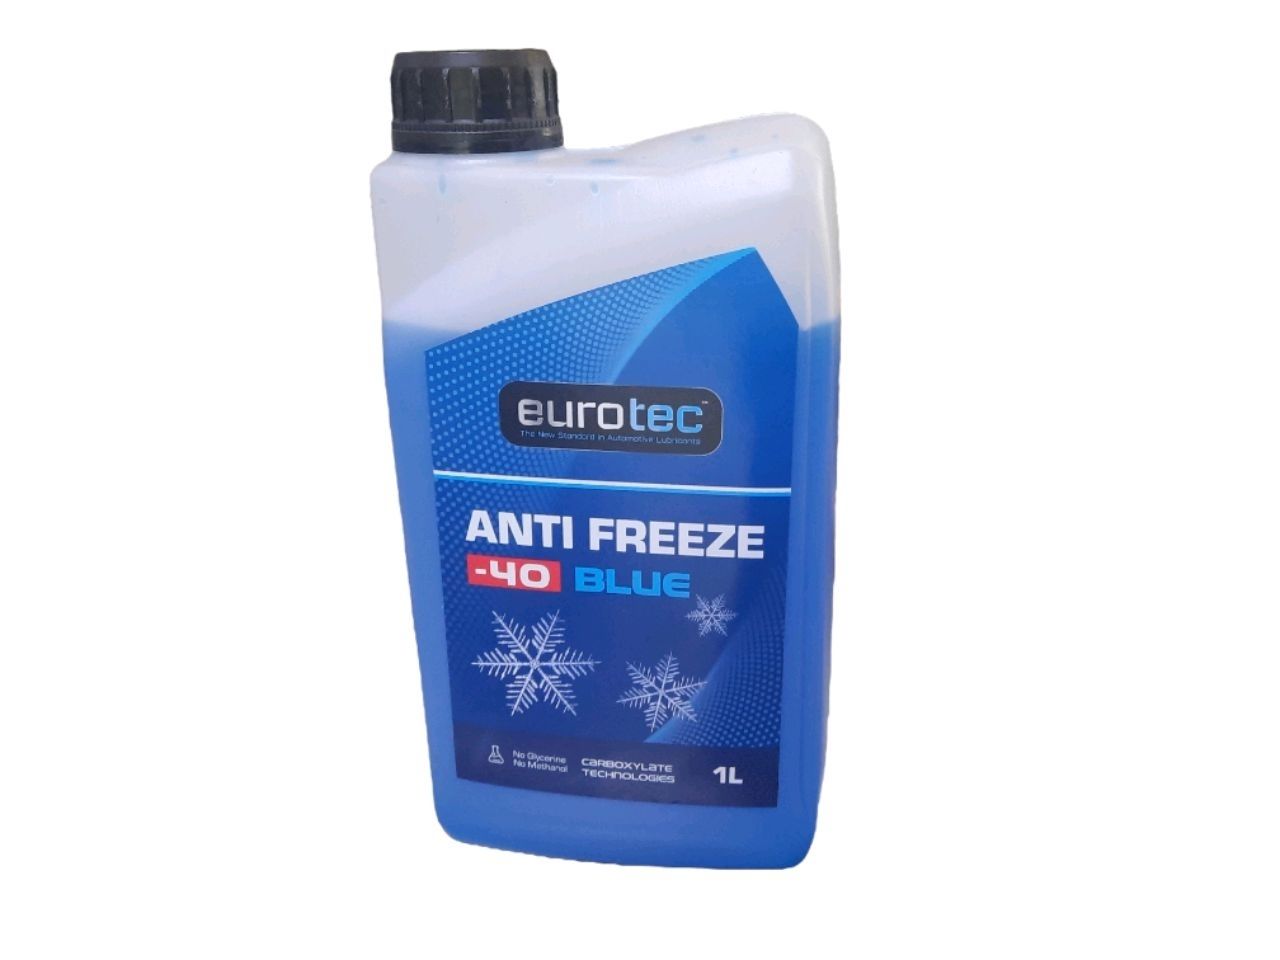 EUROTEC Antifreeze -40 Blue 1L.